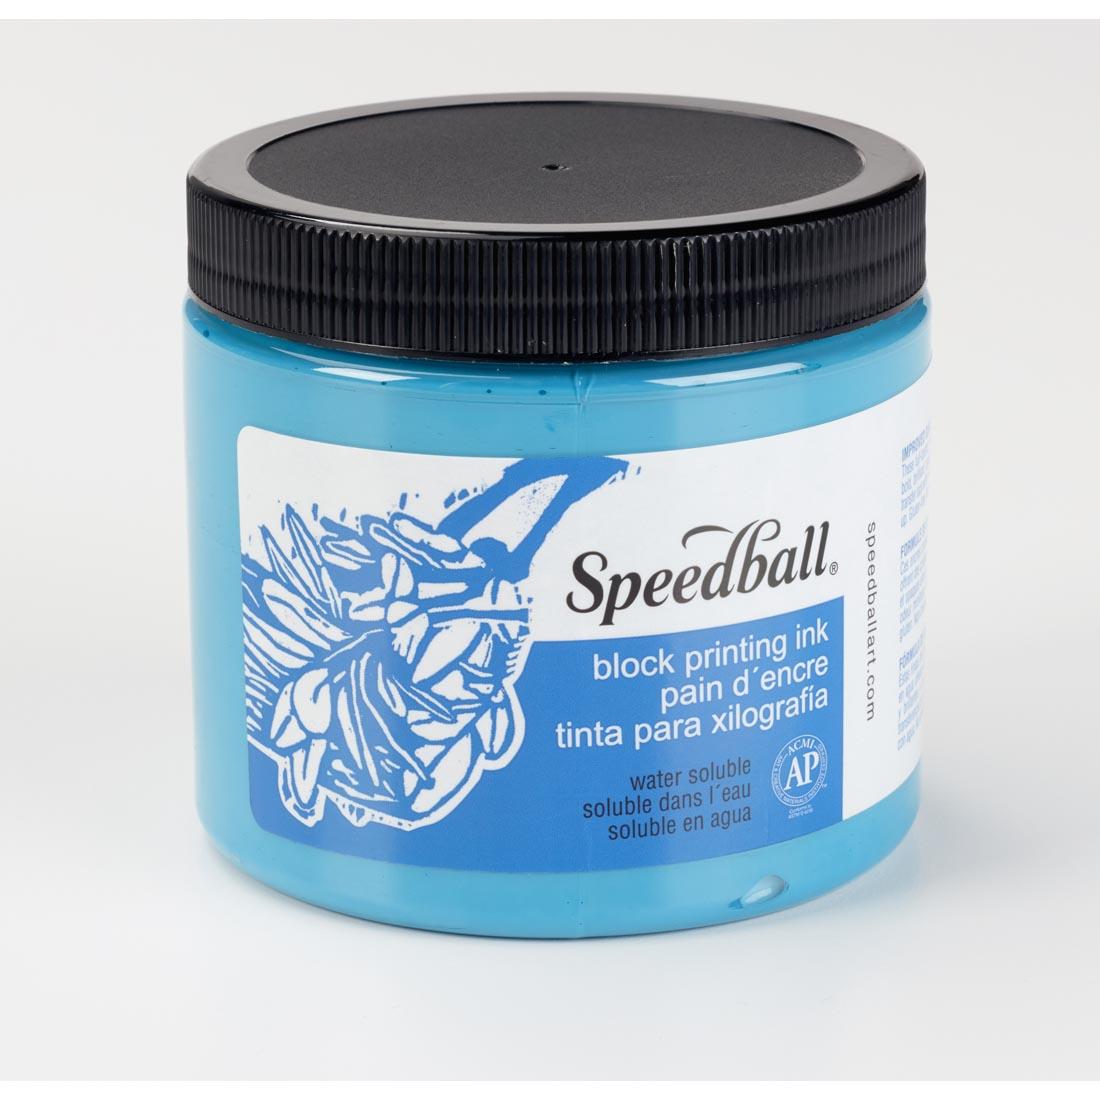 Jar of Turquoise Speedball Water-Soluble Block Printing Ink